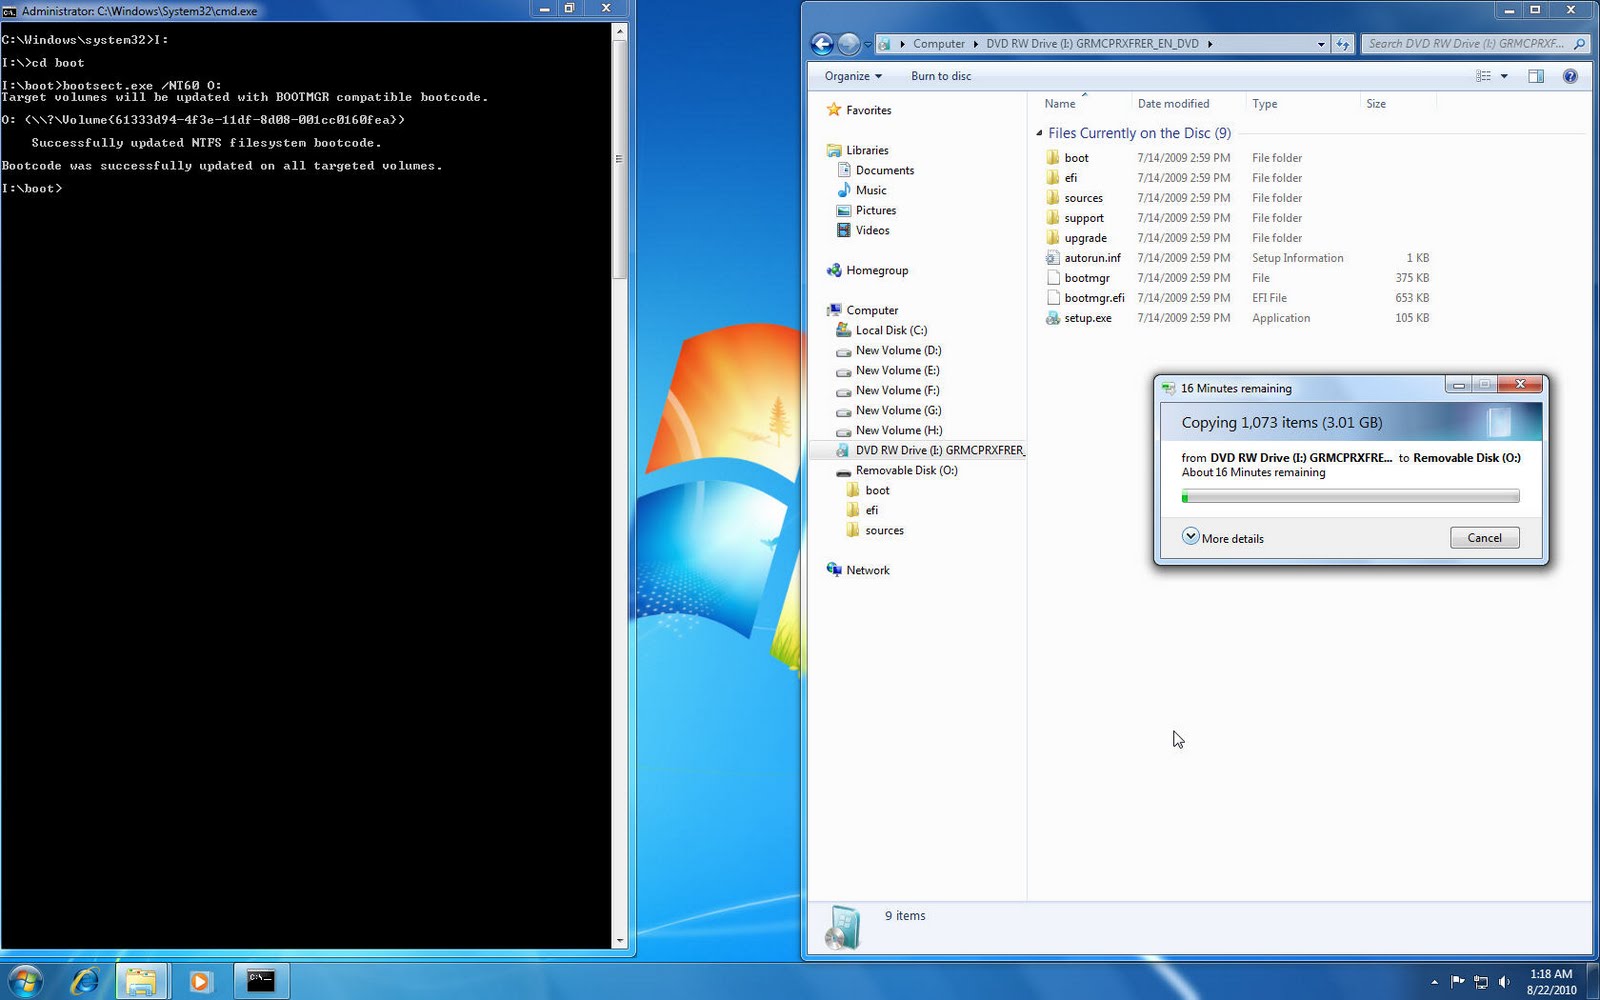 How To Create Windows 10 Bootable DVD - intowindowscom